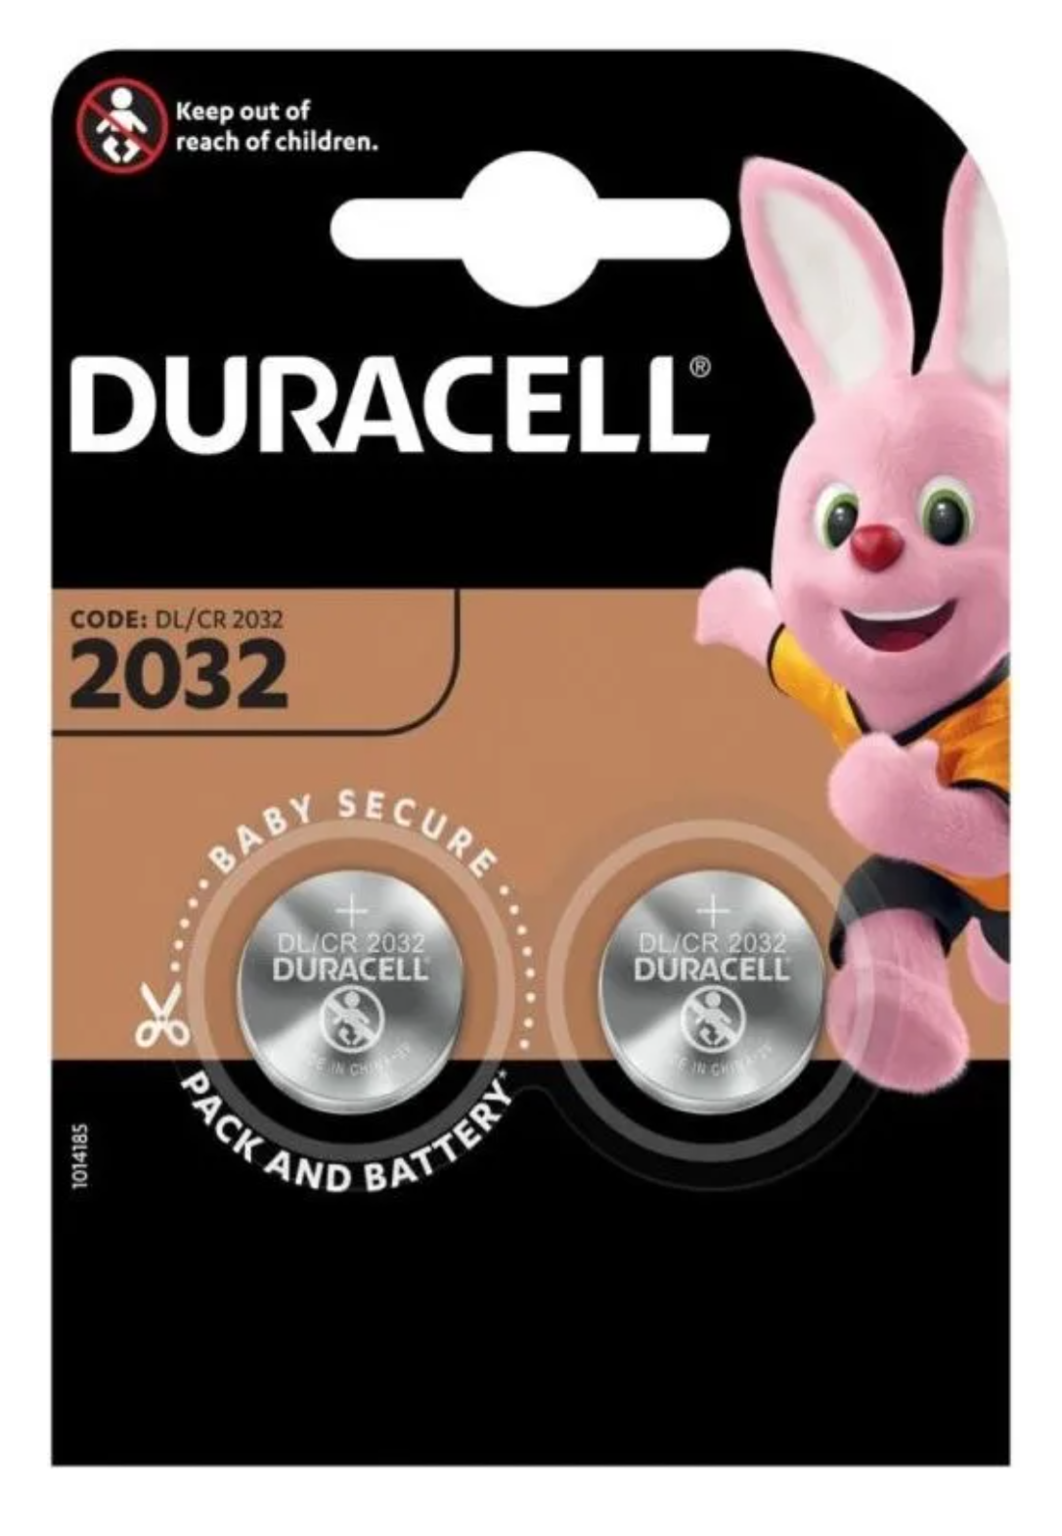 Duracell CR2032 knoopcelbatterij 2-pack